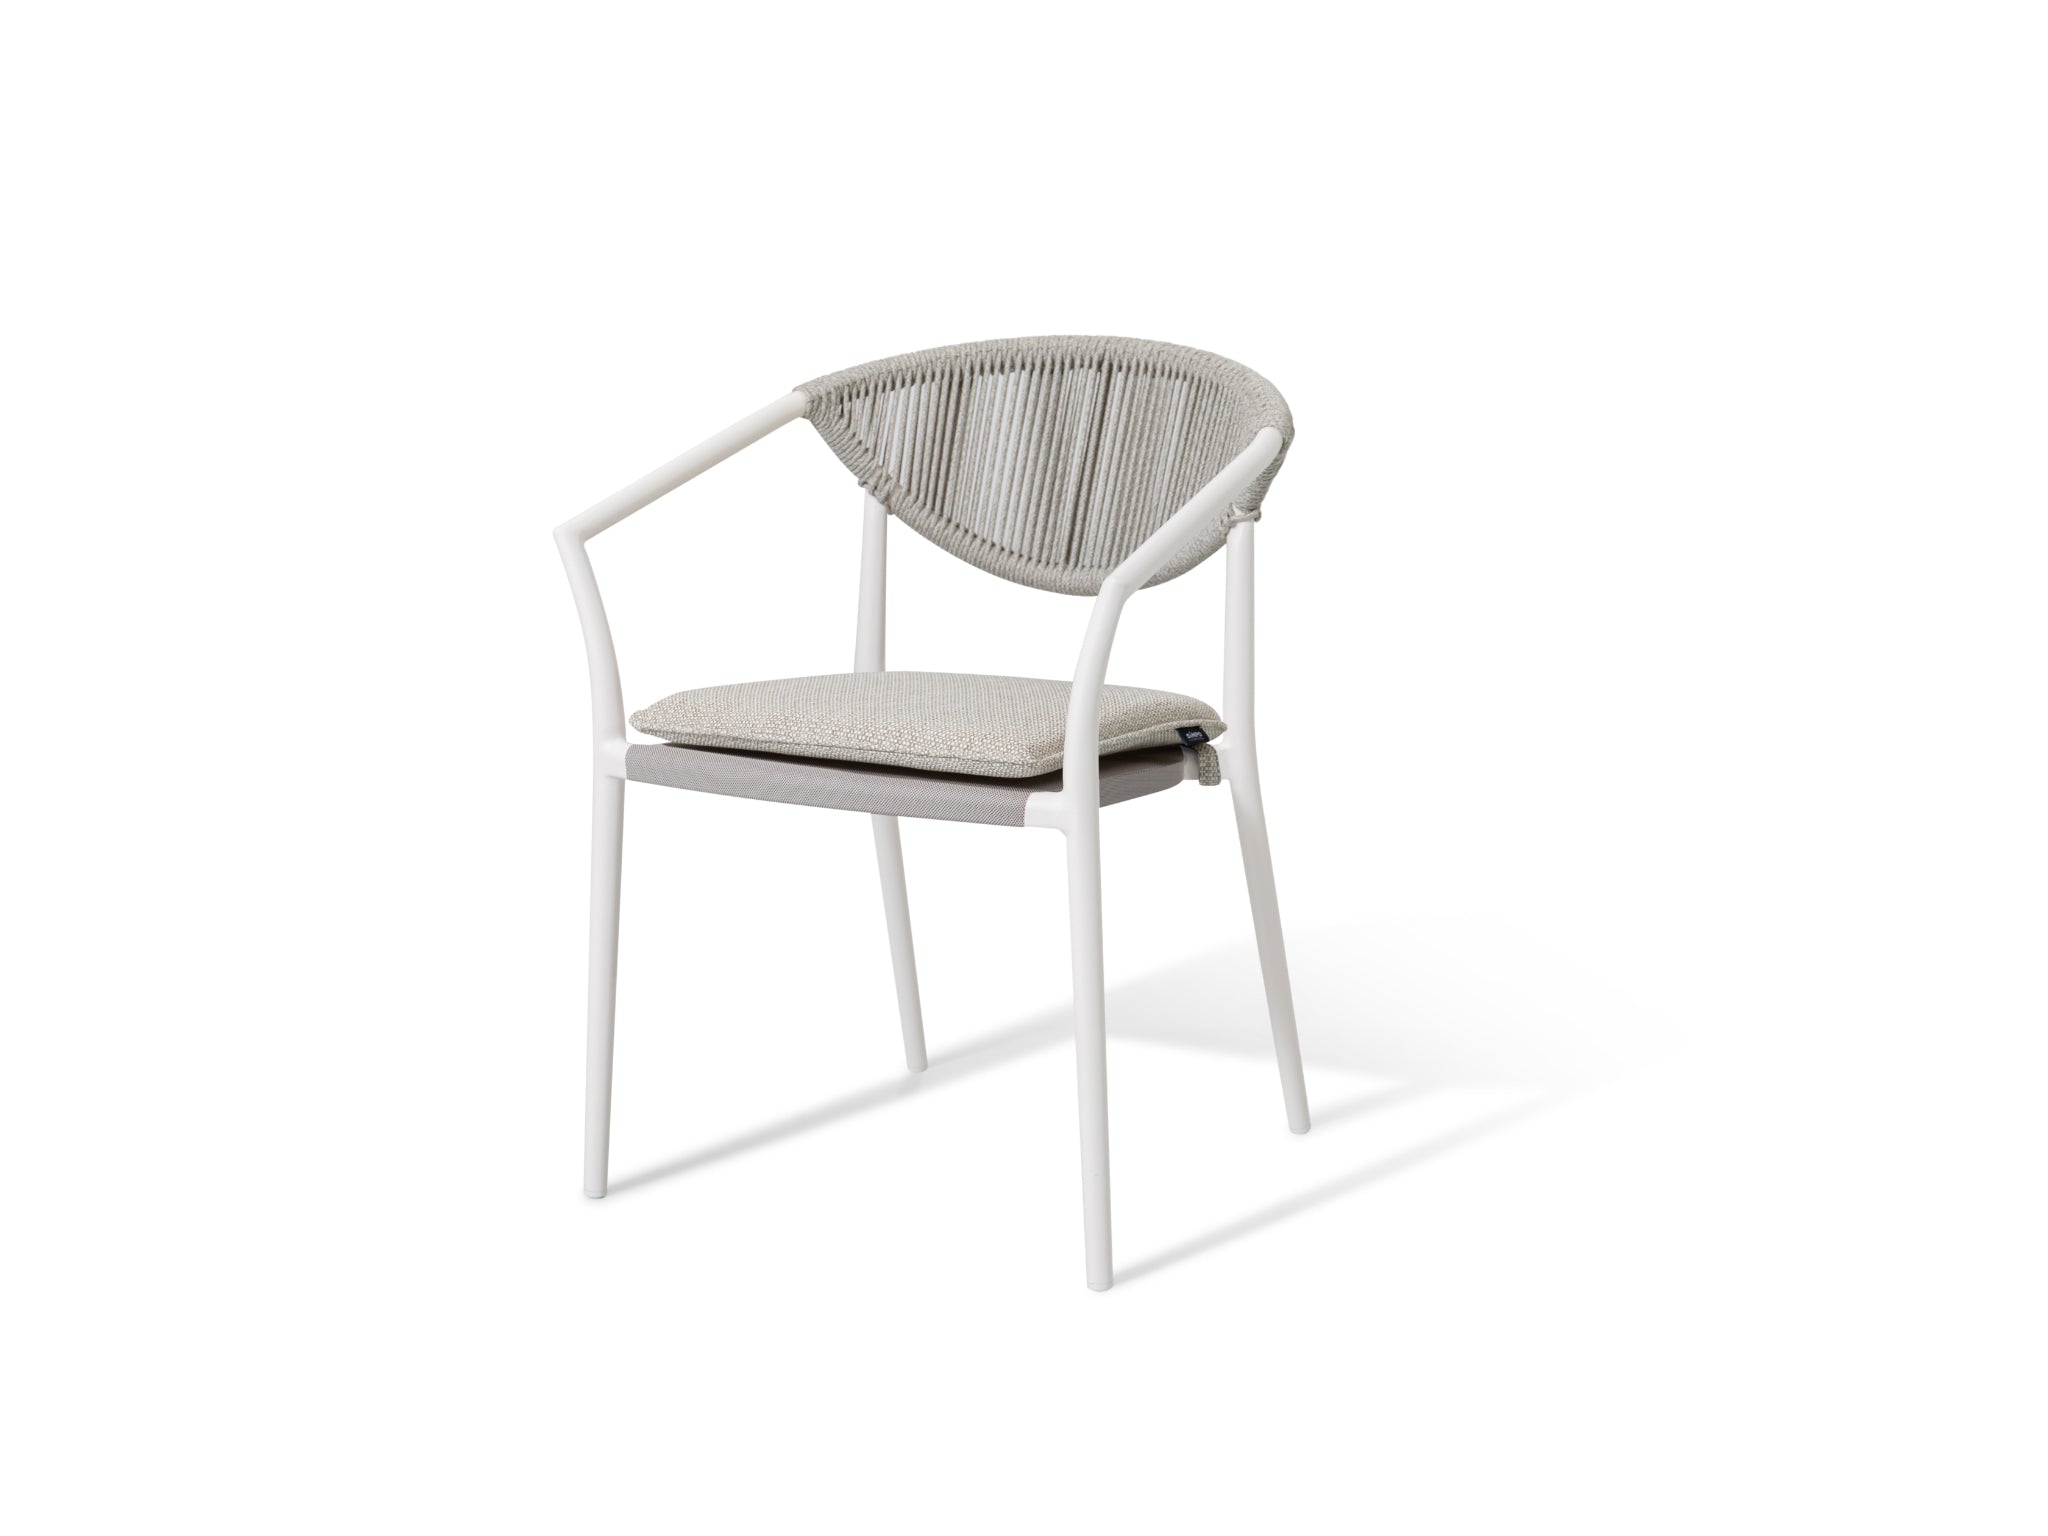 SIMPO by Sunlongarden Fino Dining Chair